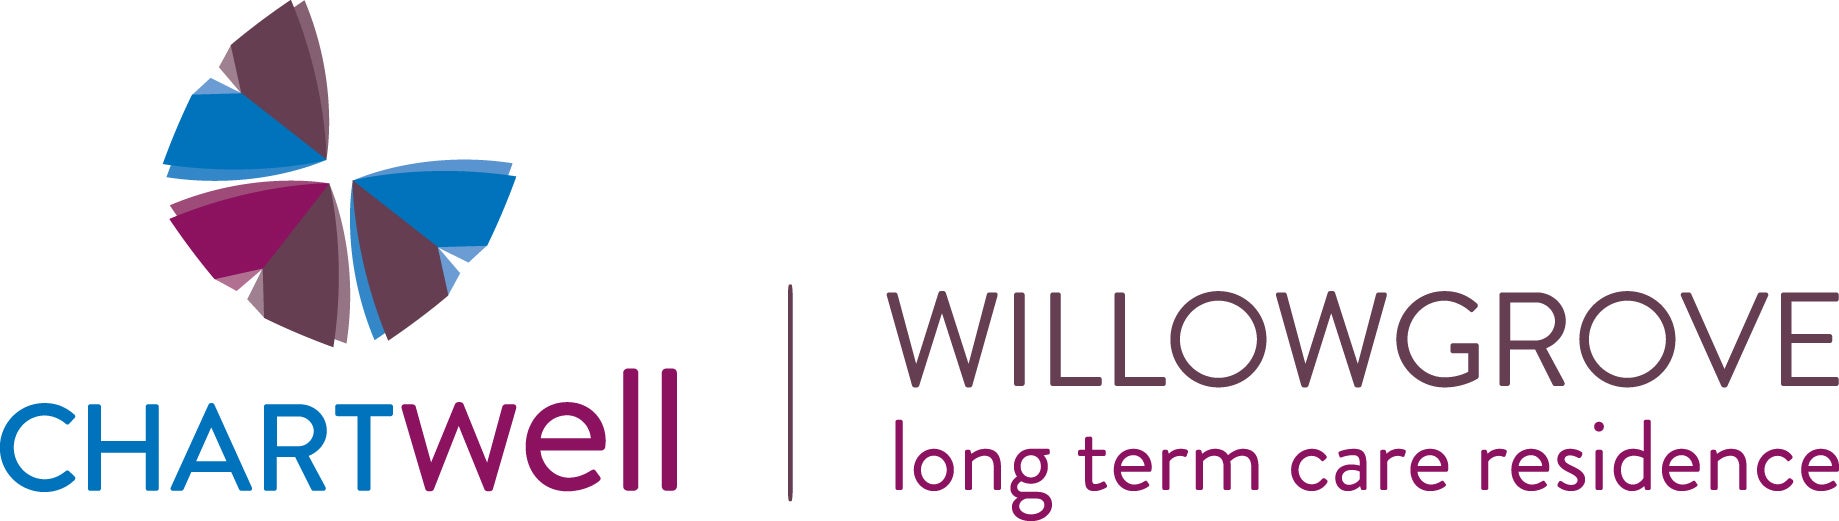 willowgrove logo